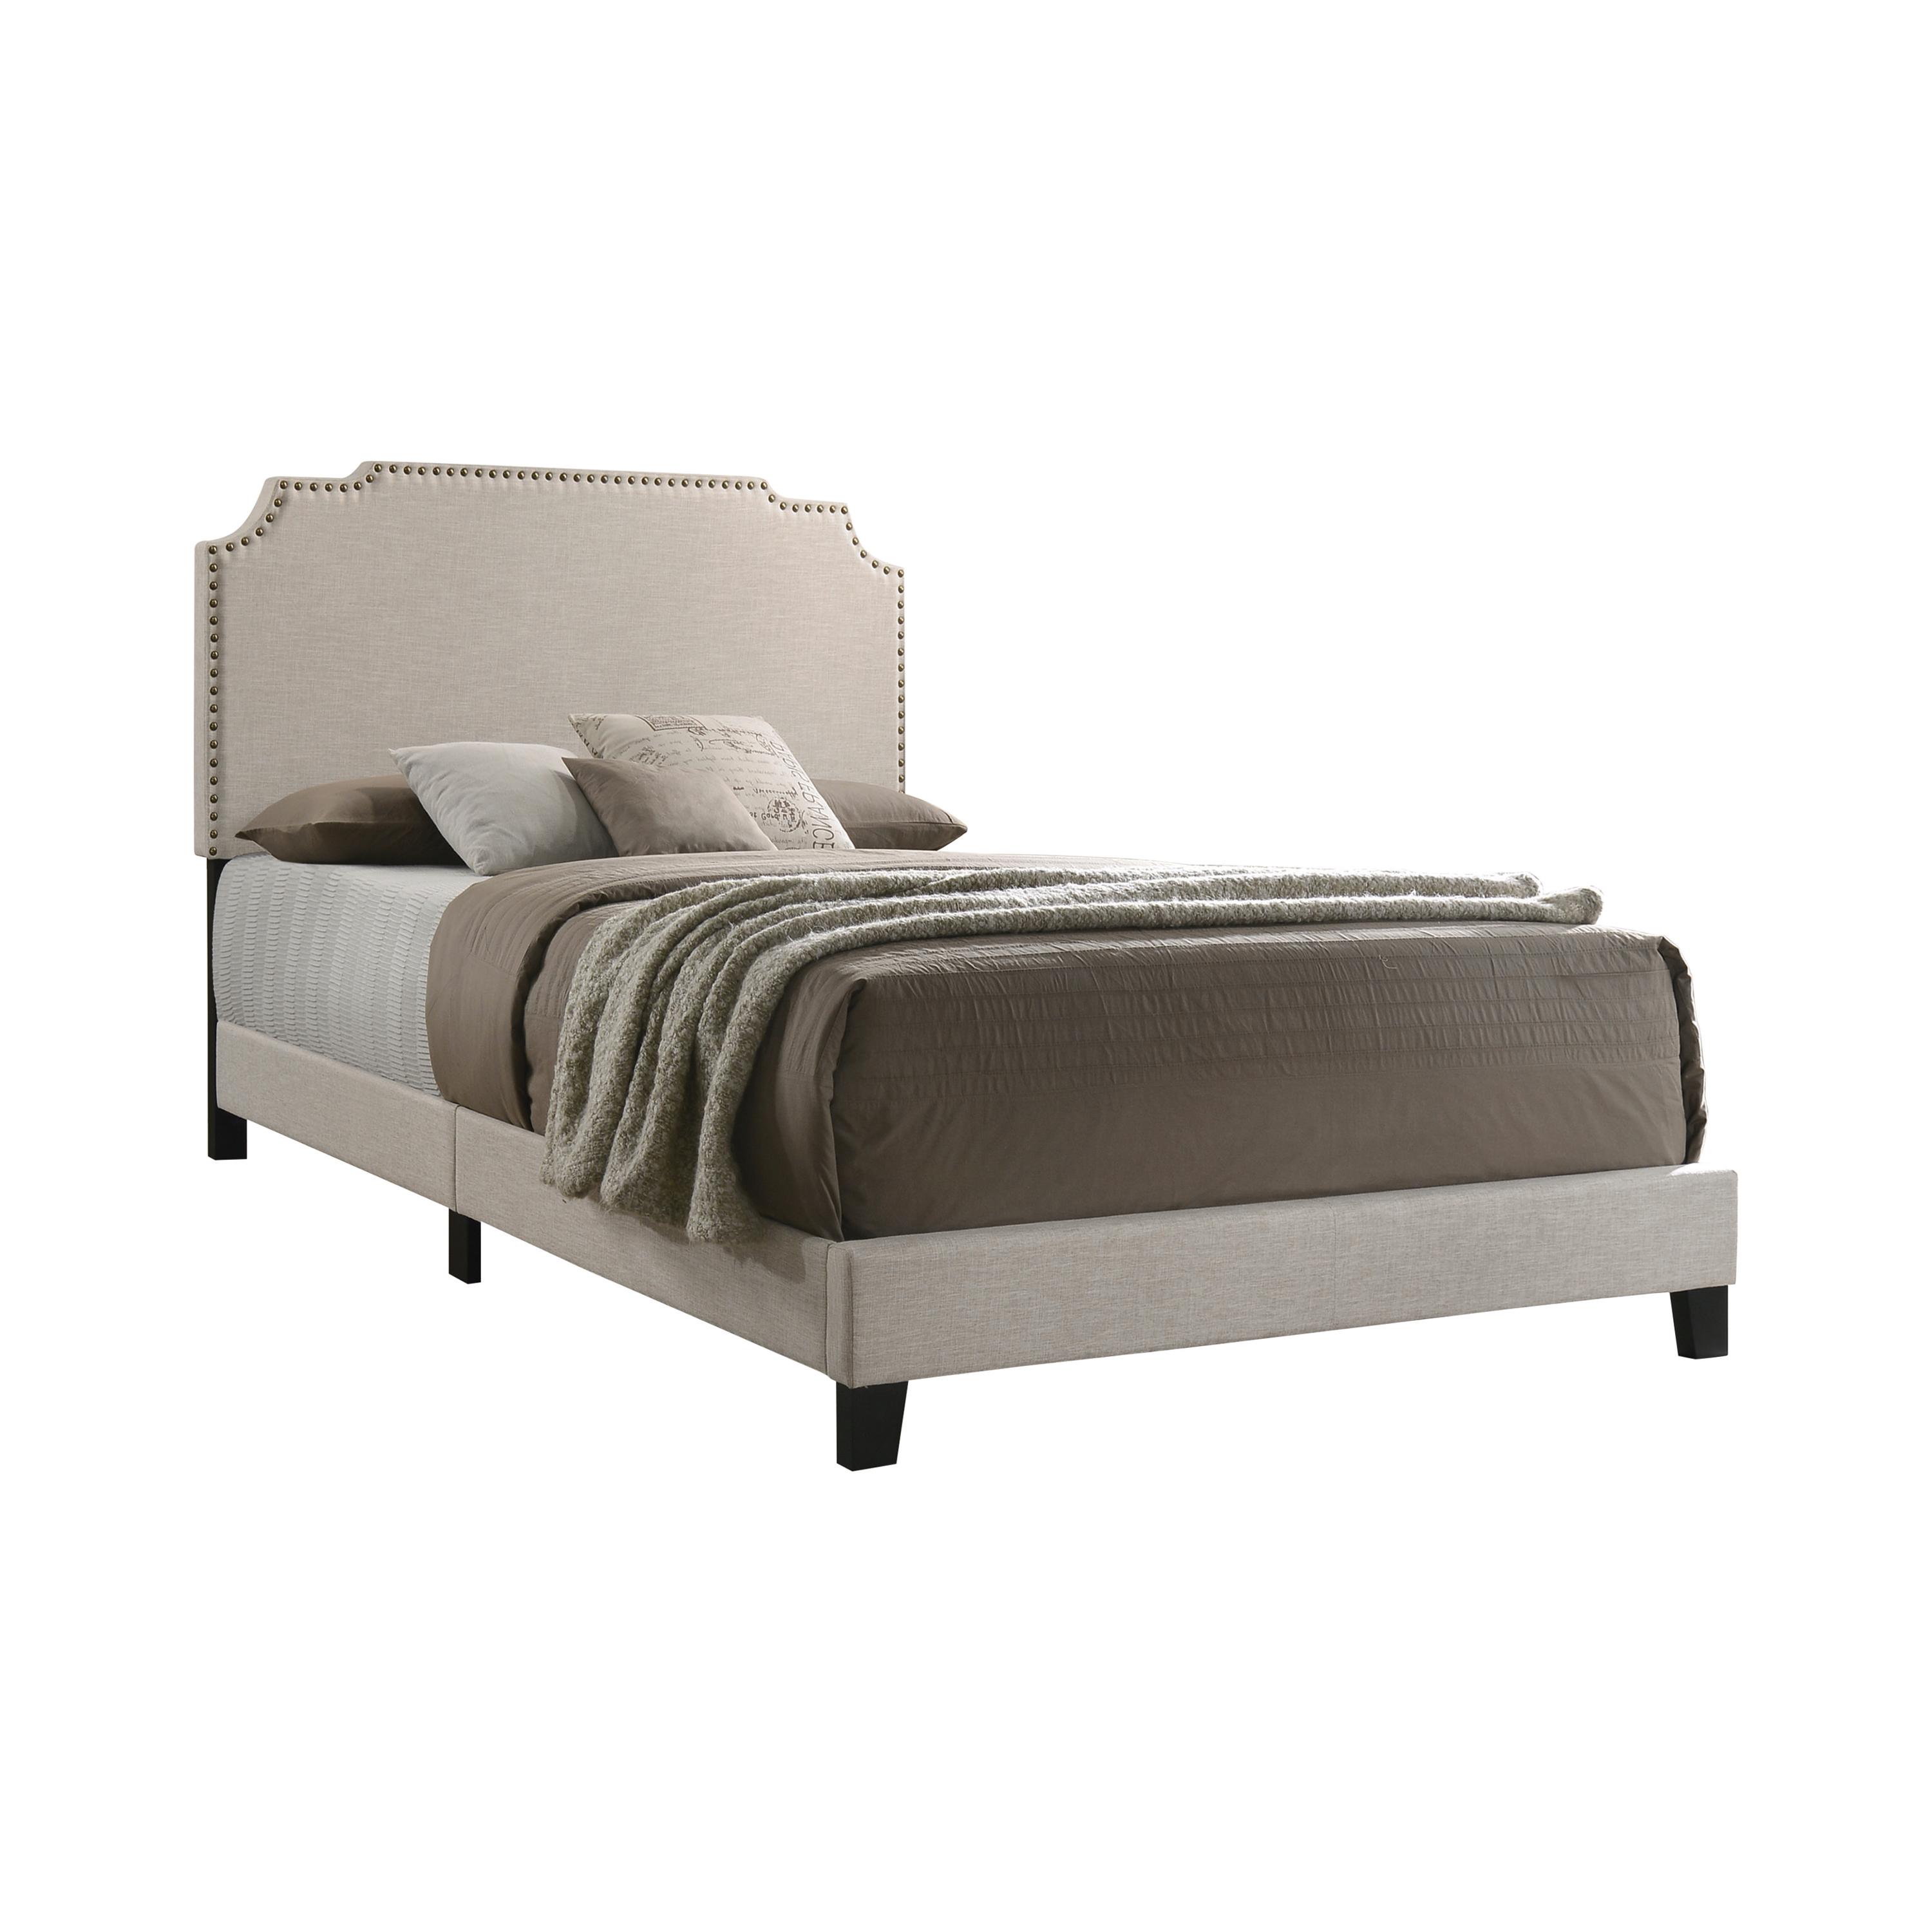 Contemporary Bed 310061KE Tamarac 310061KE in Beige Fabric